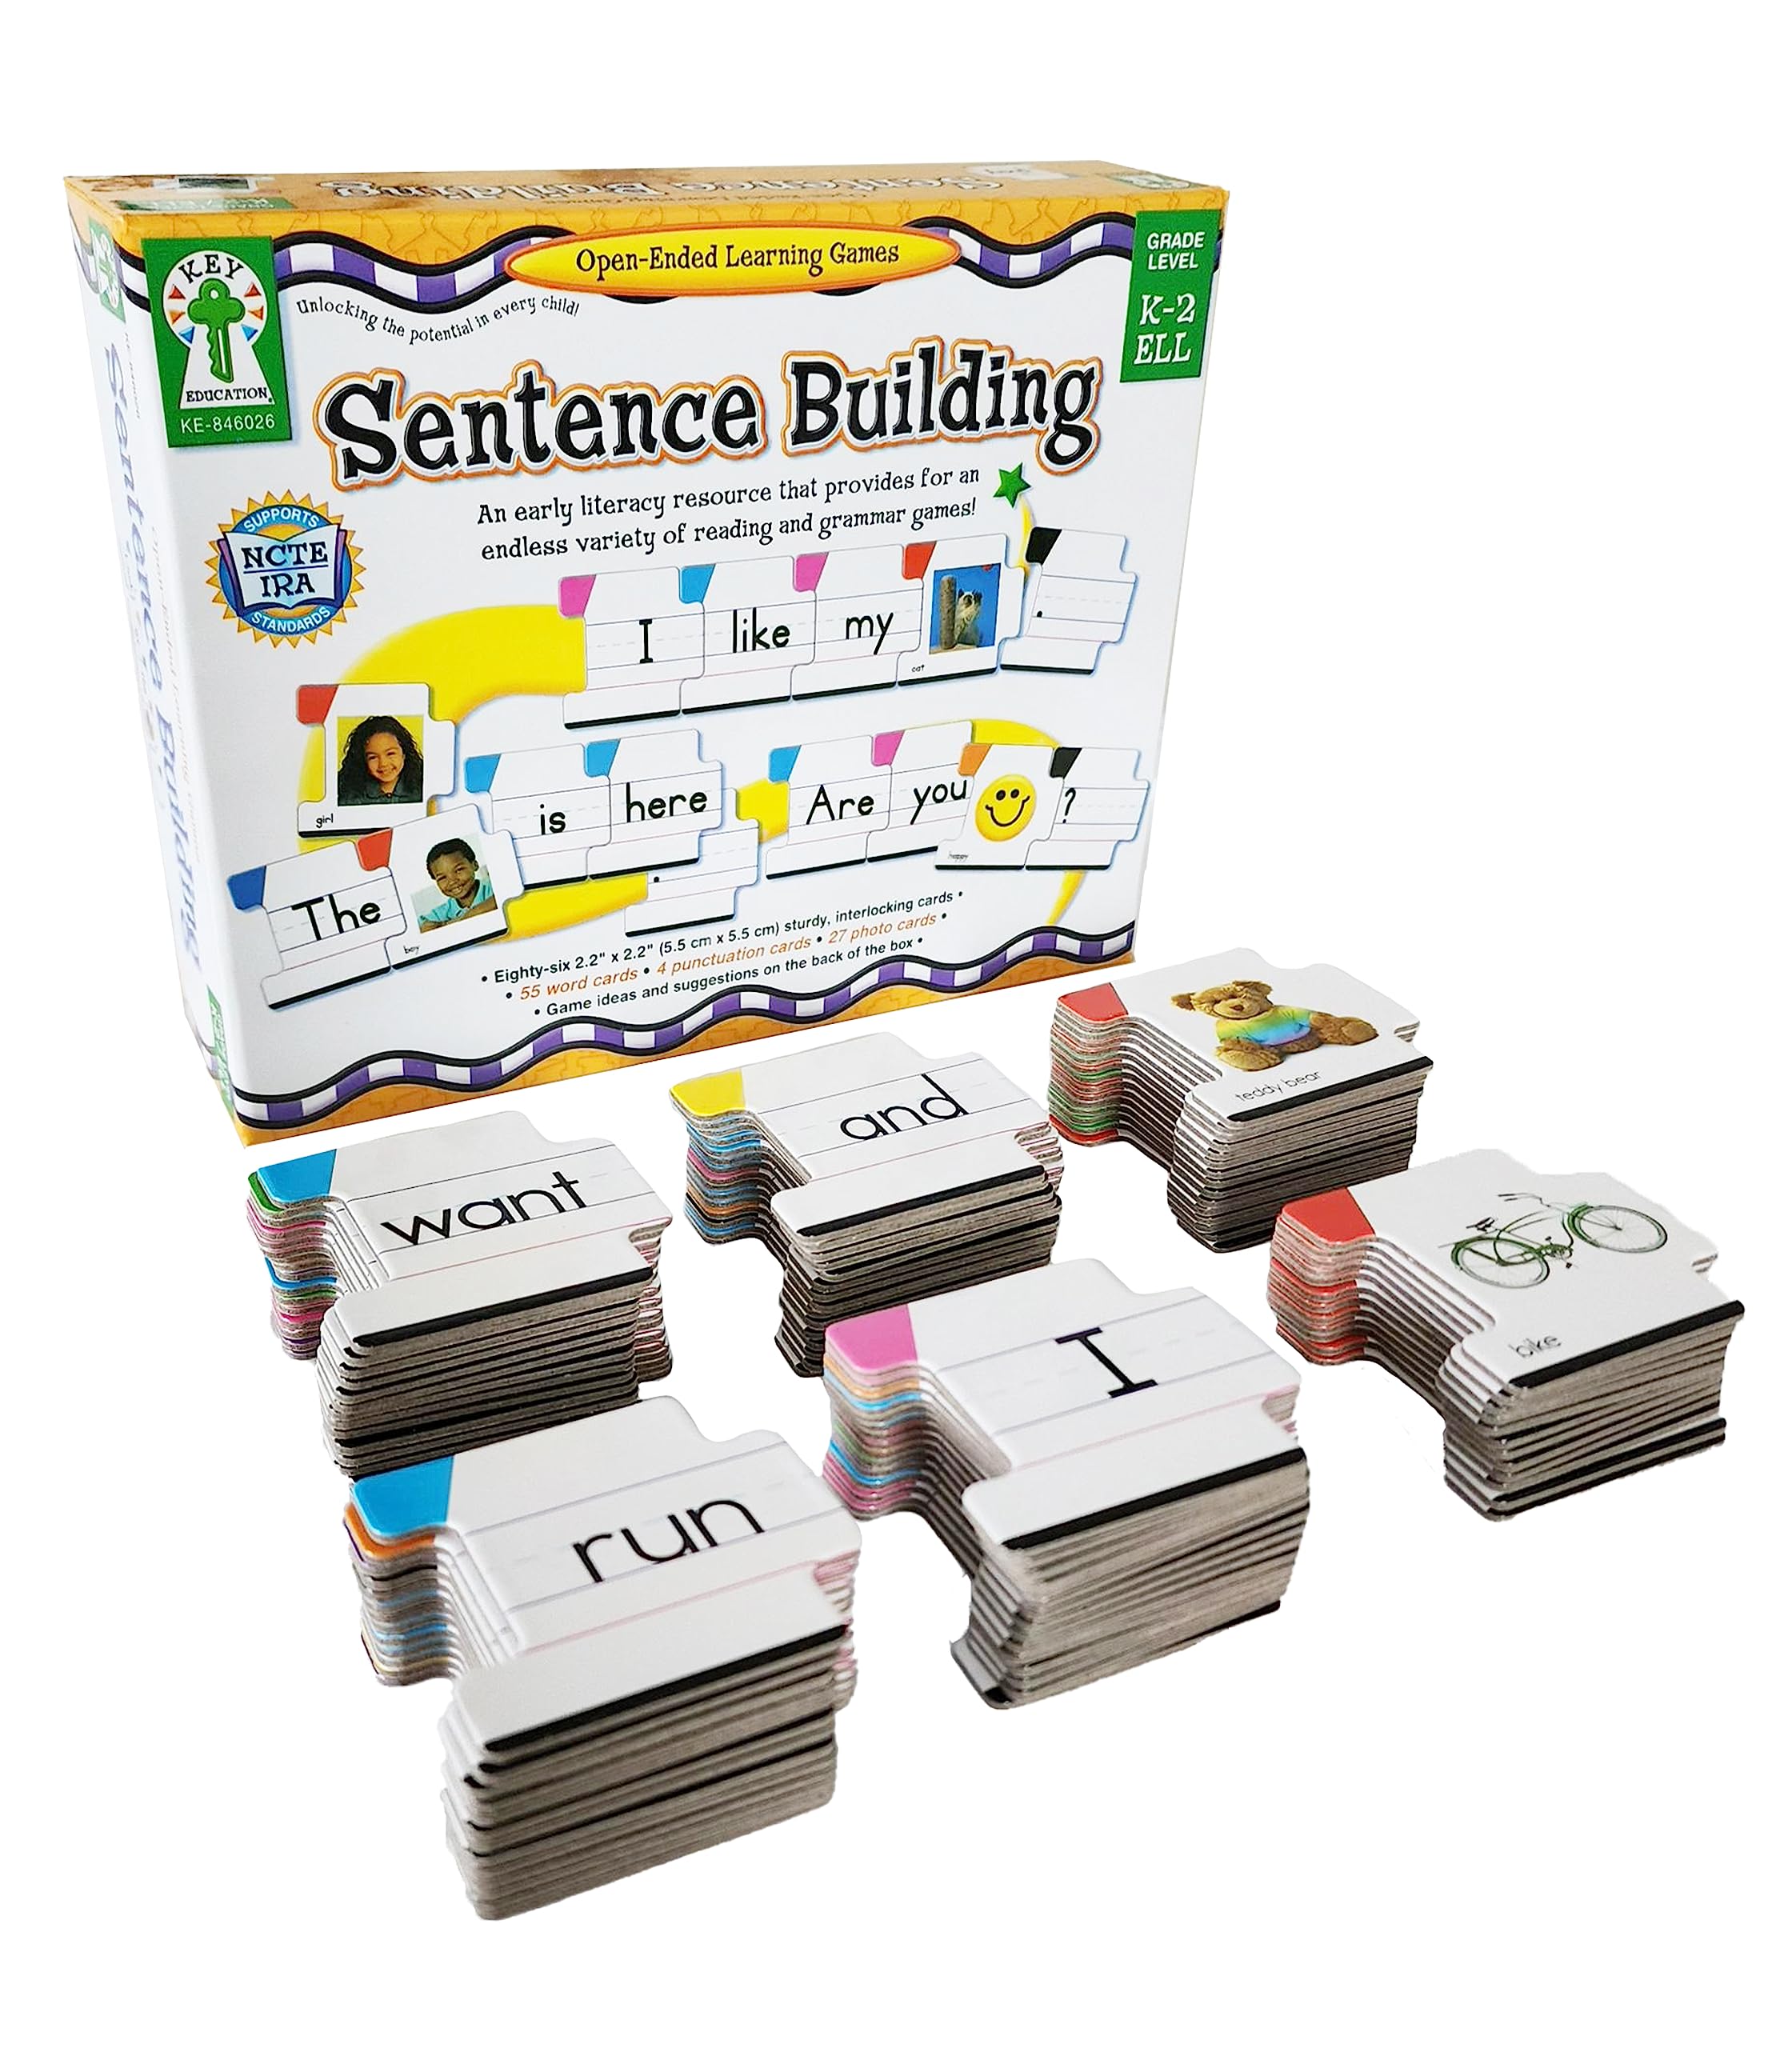 Key Education Sentence Building for Kids